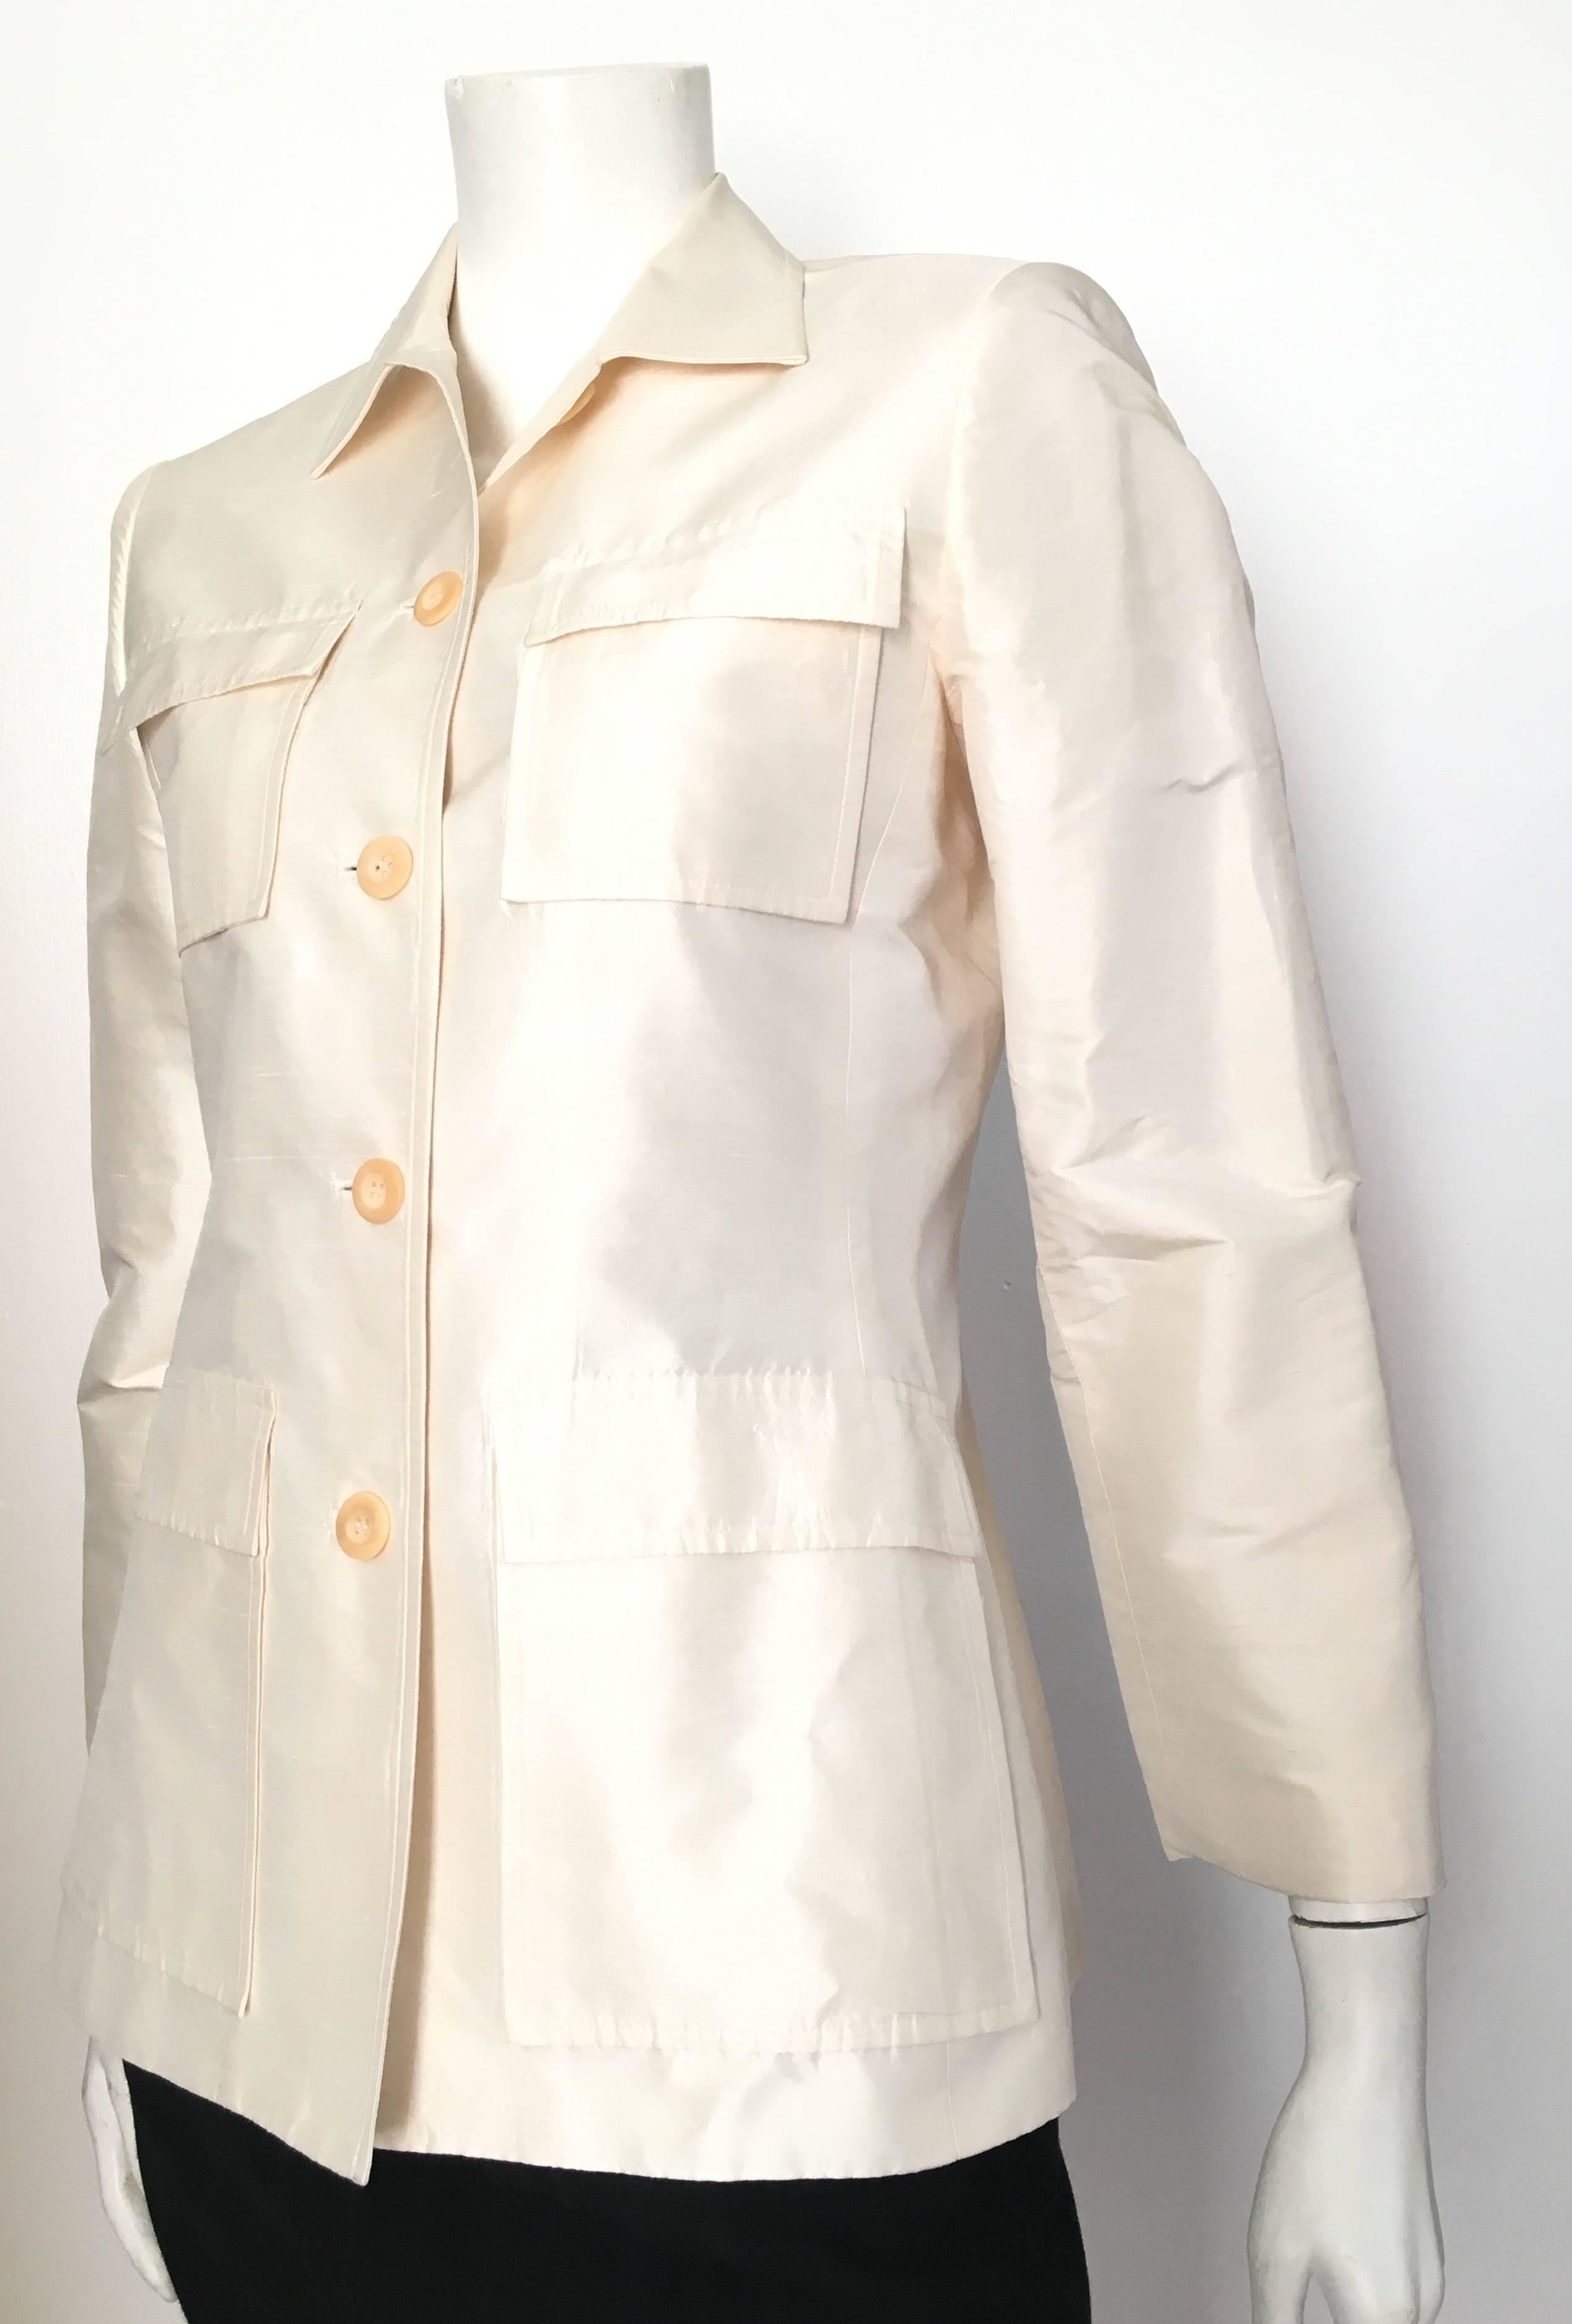 Oscar de la Renta White Silk Evening Jacket  Size 6. For Sale 4